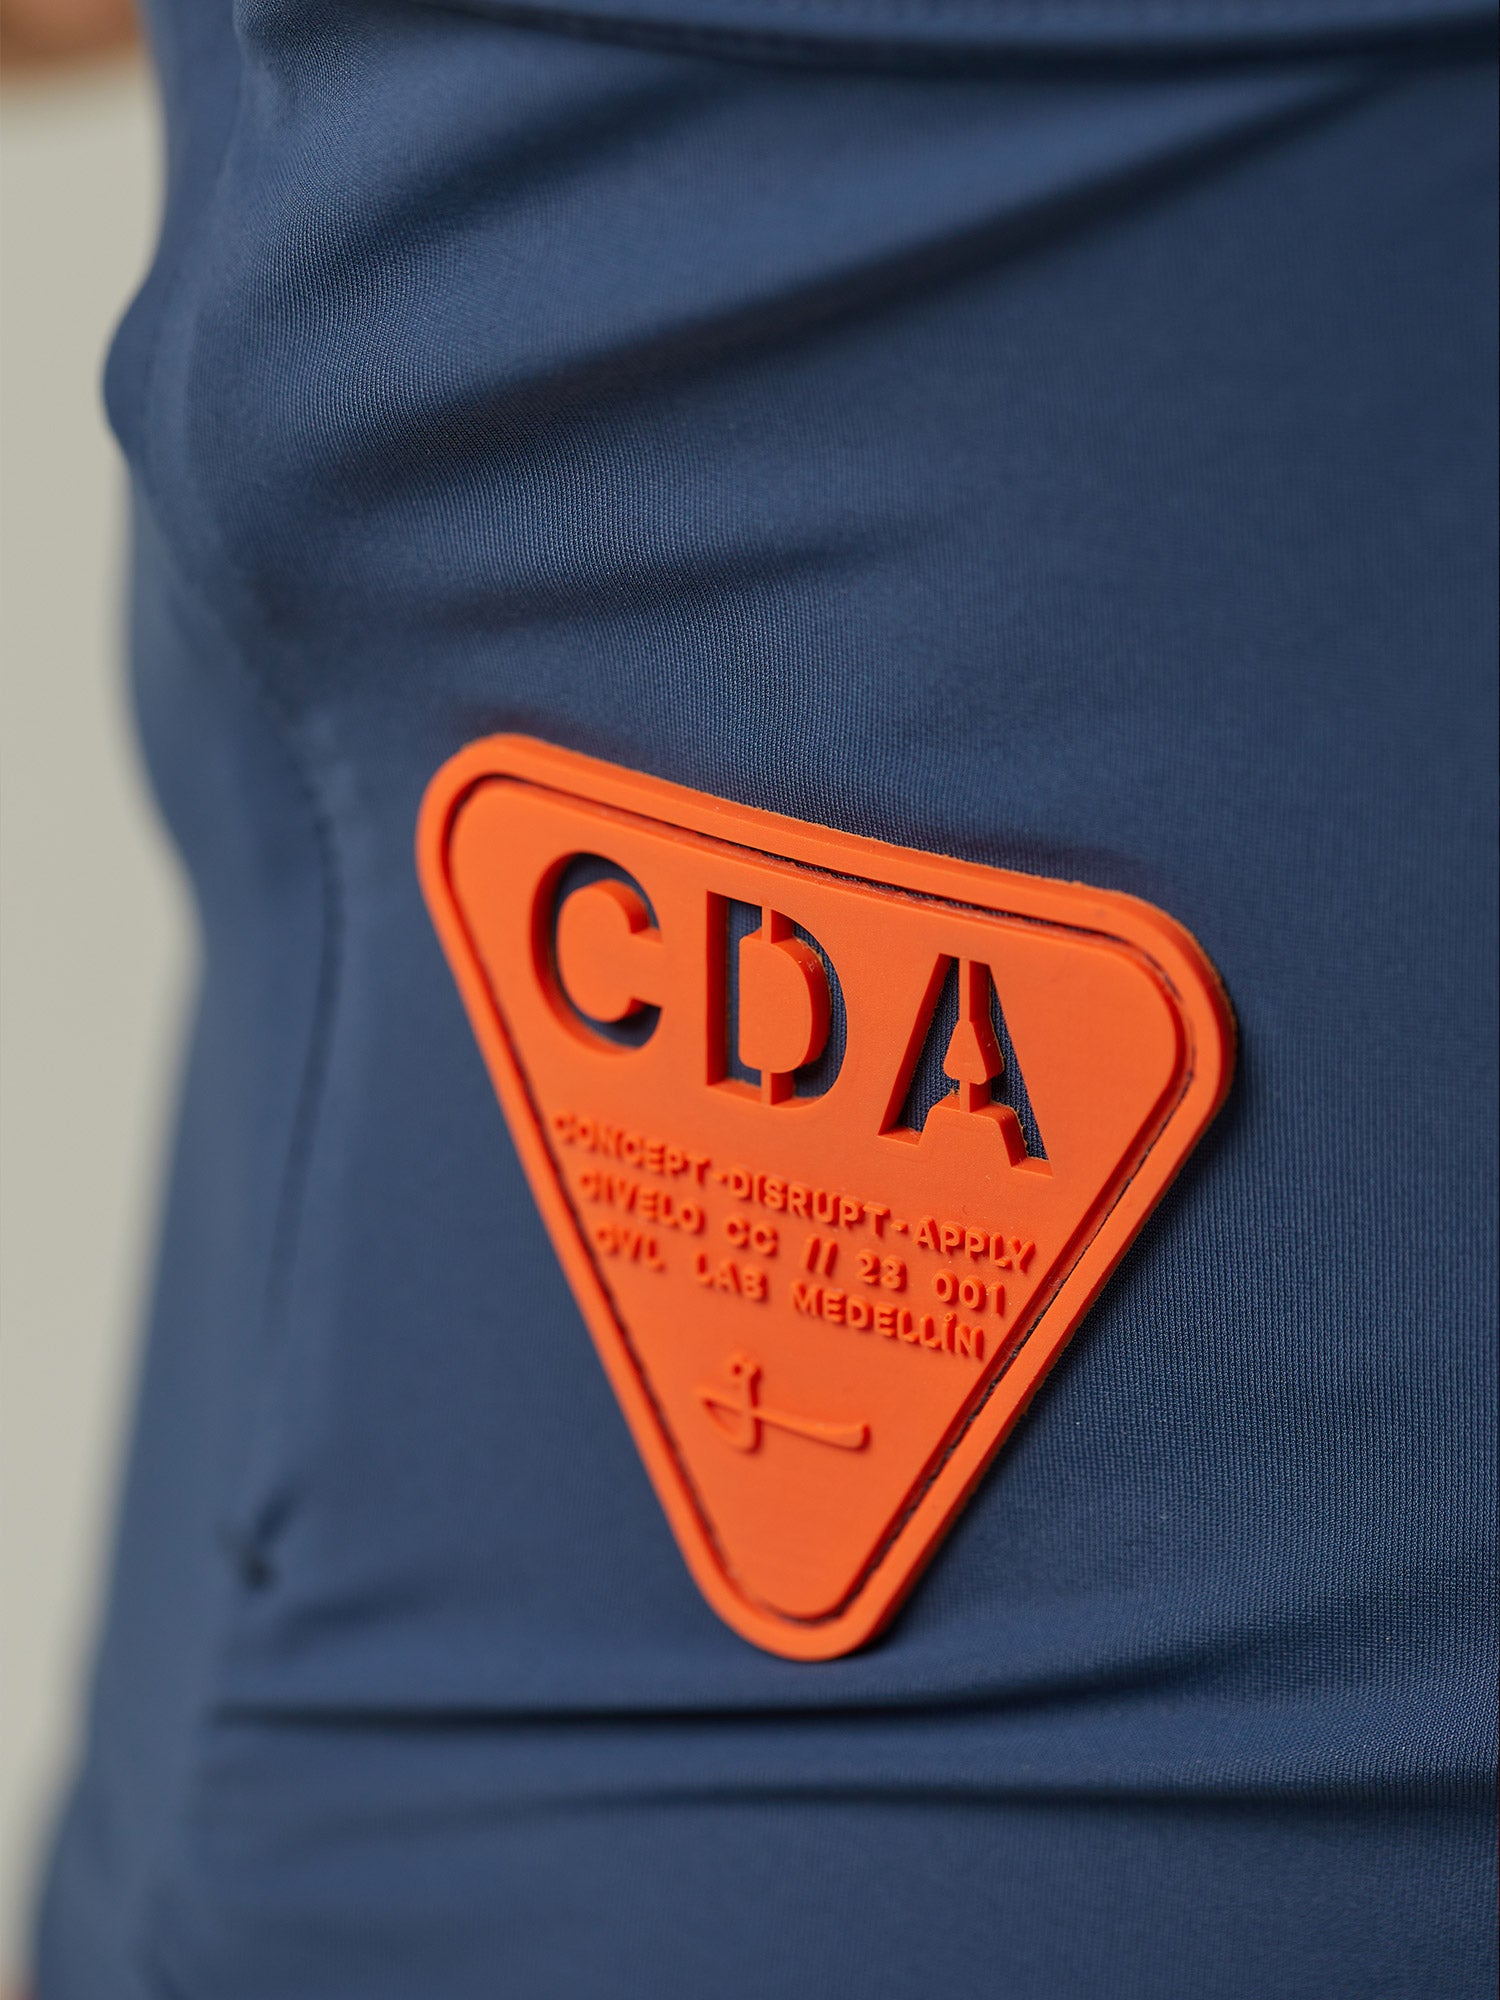 CDA Short Sleeve Jersey